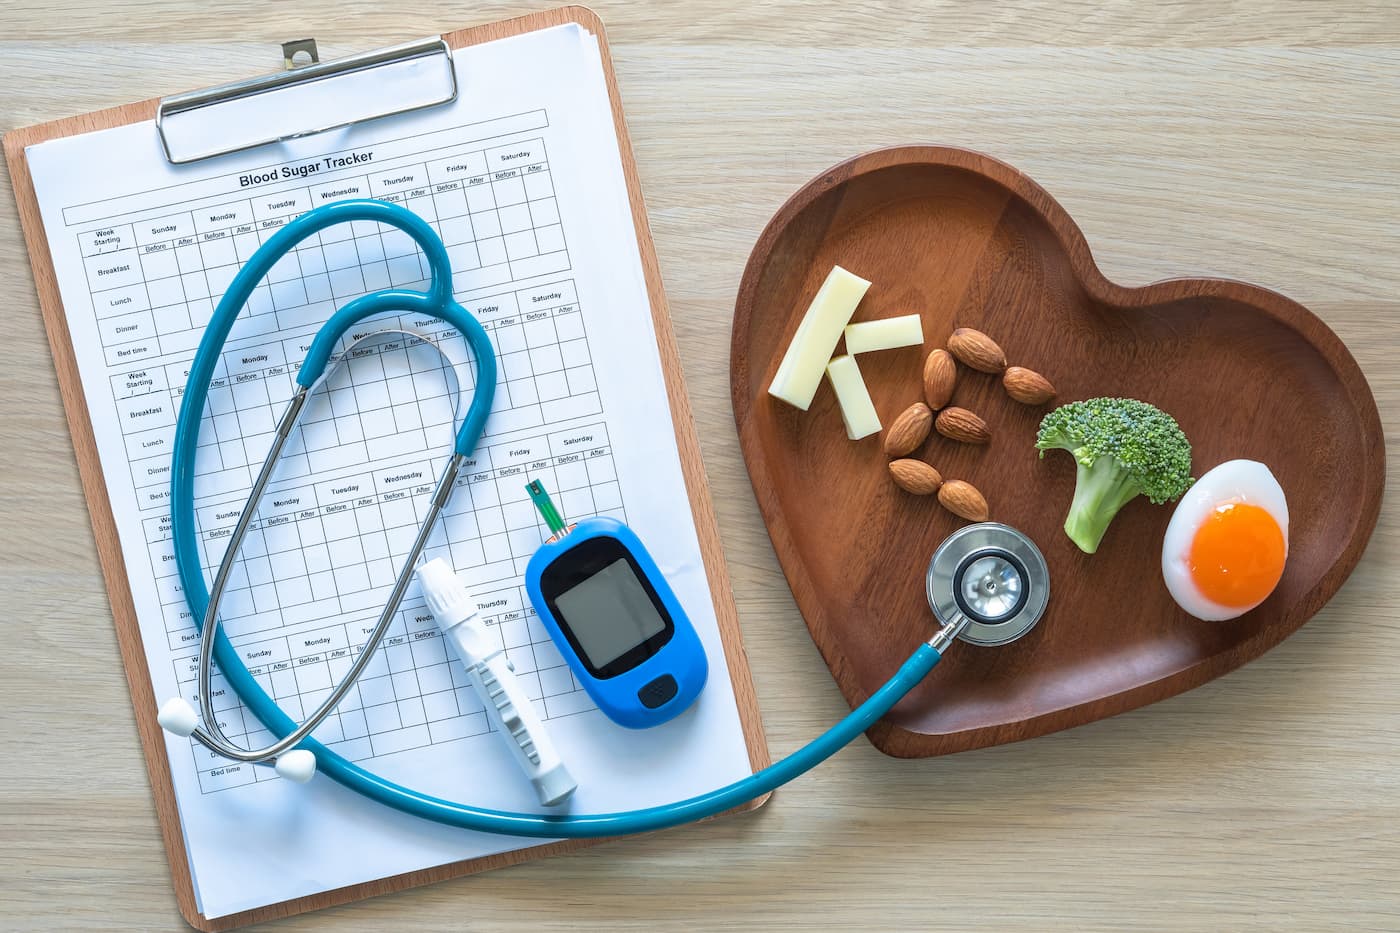 Can a keto diet help reverse type 2 diabetes